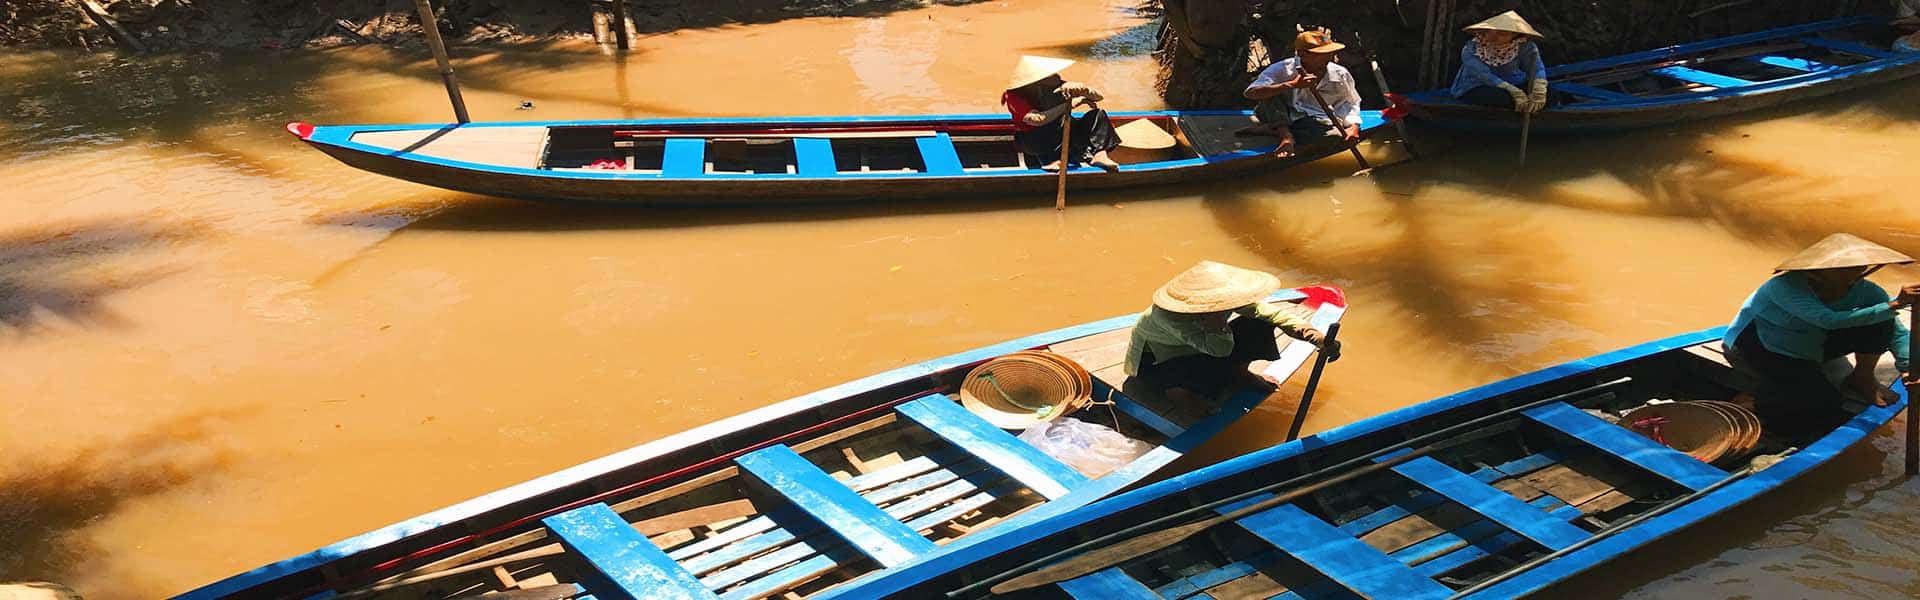 Mekong Delta boat cruise